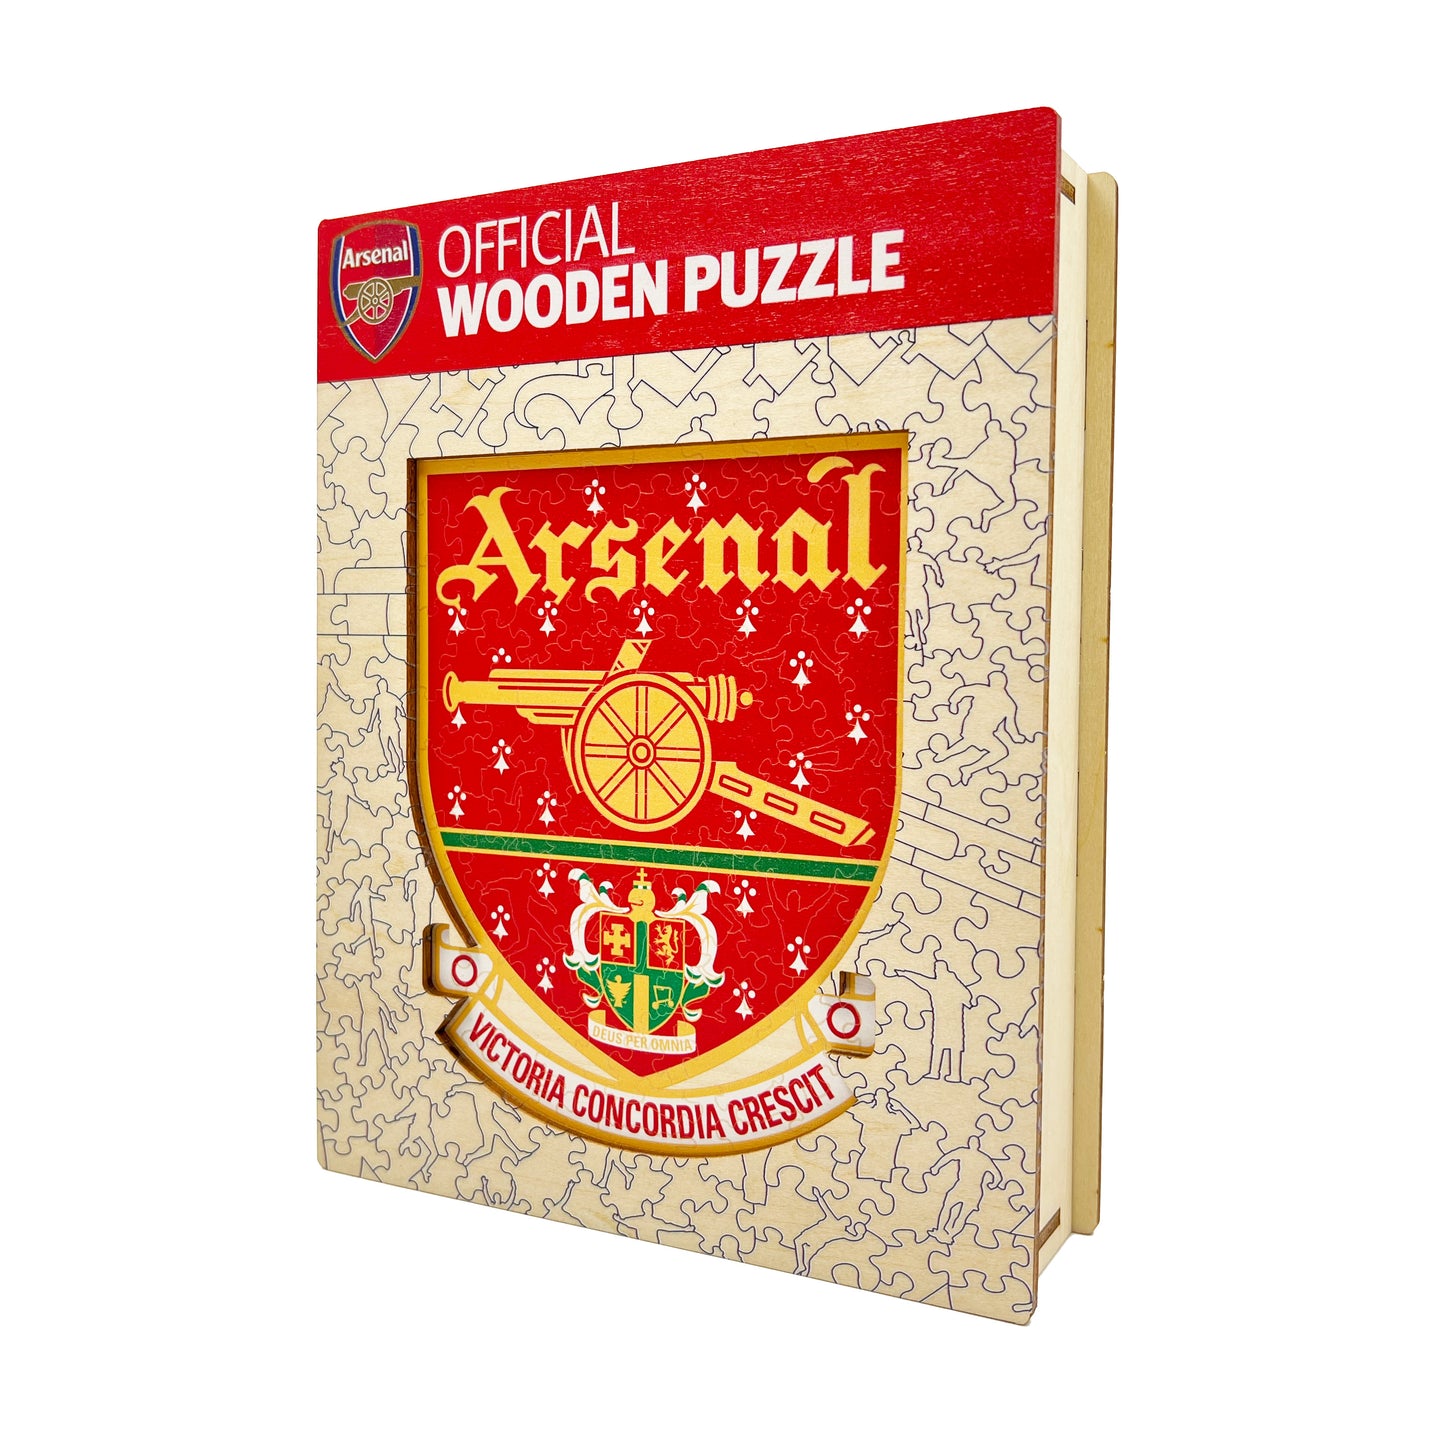 Arsenal FC® Retro Crest - Wooden Puzzle